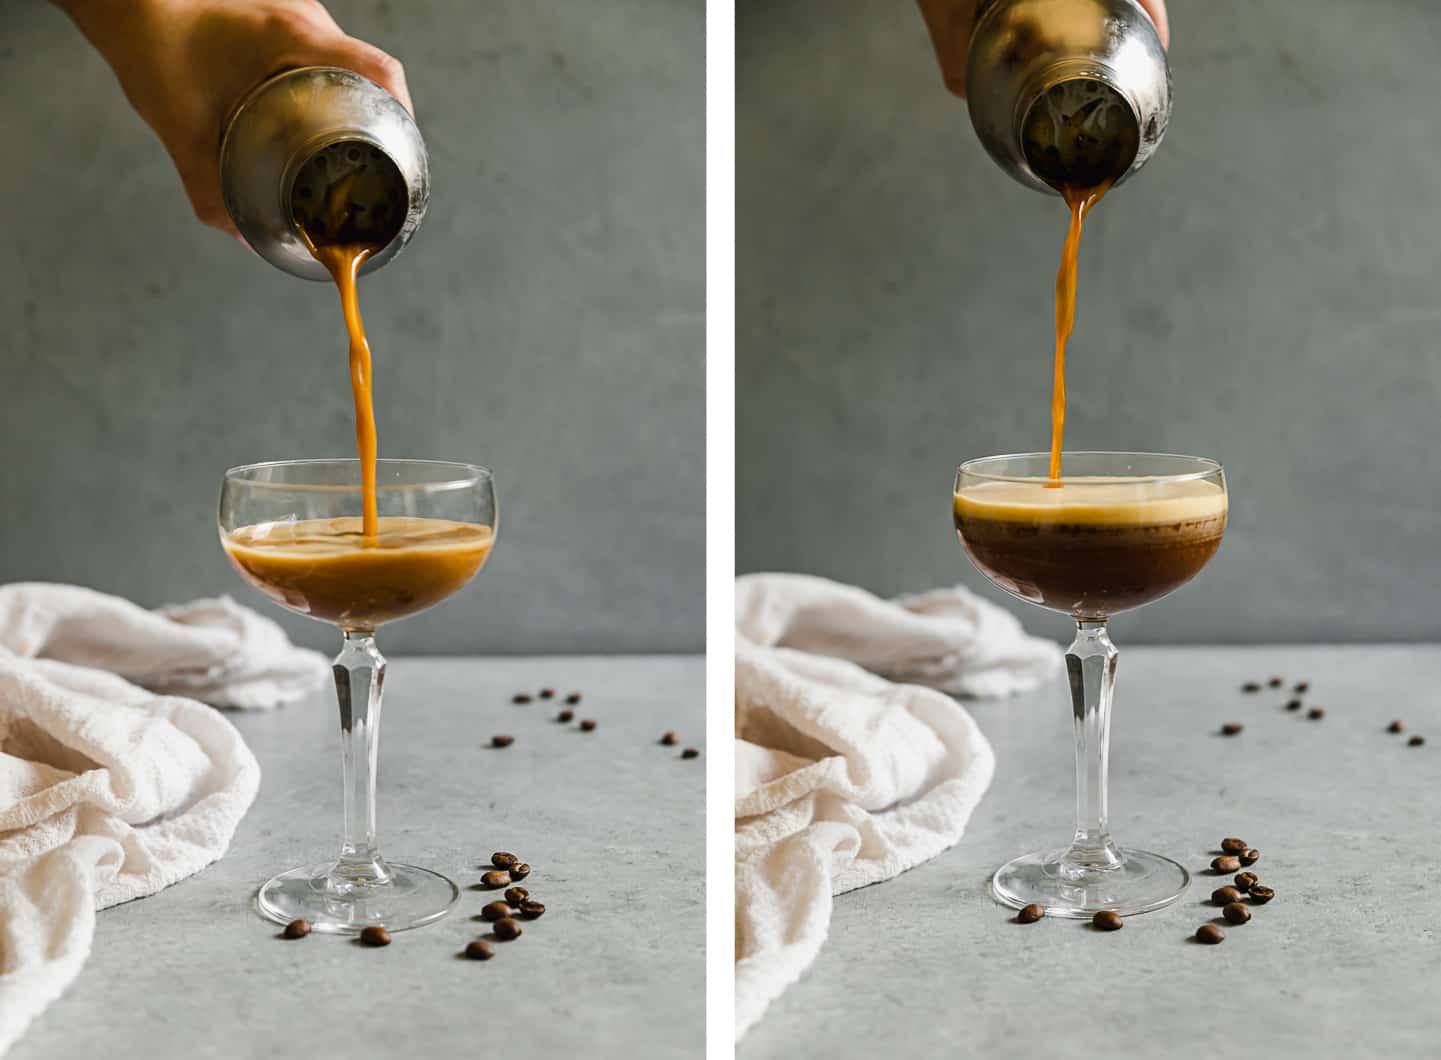 espresso martini being poured into a glass